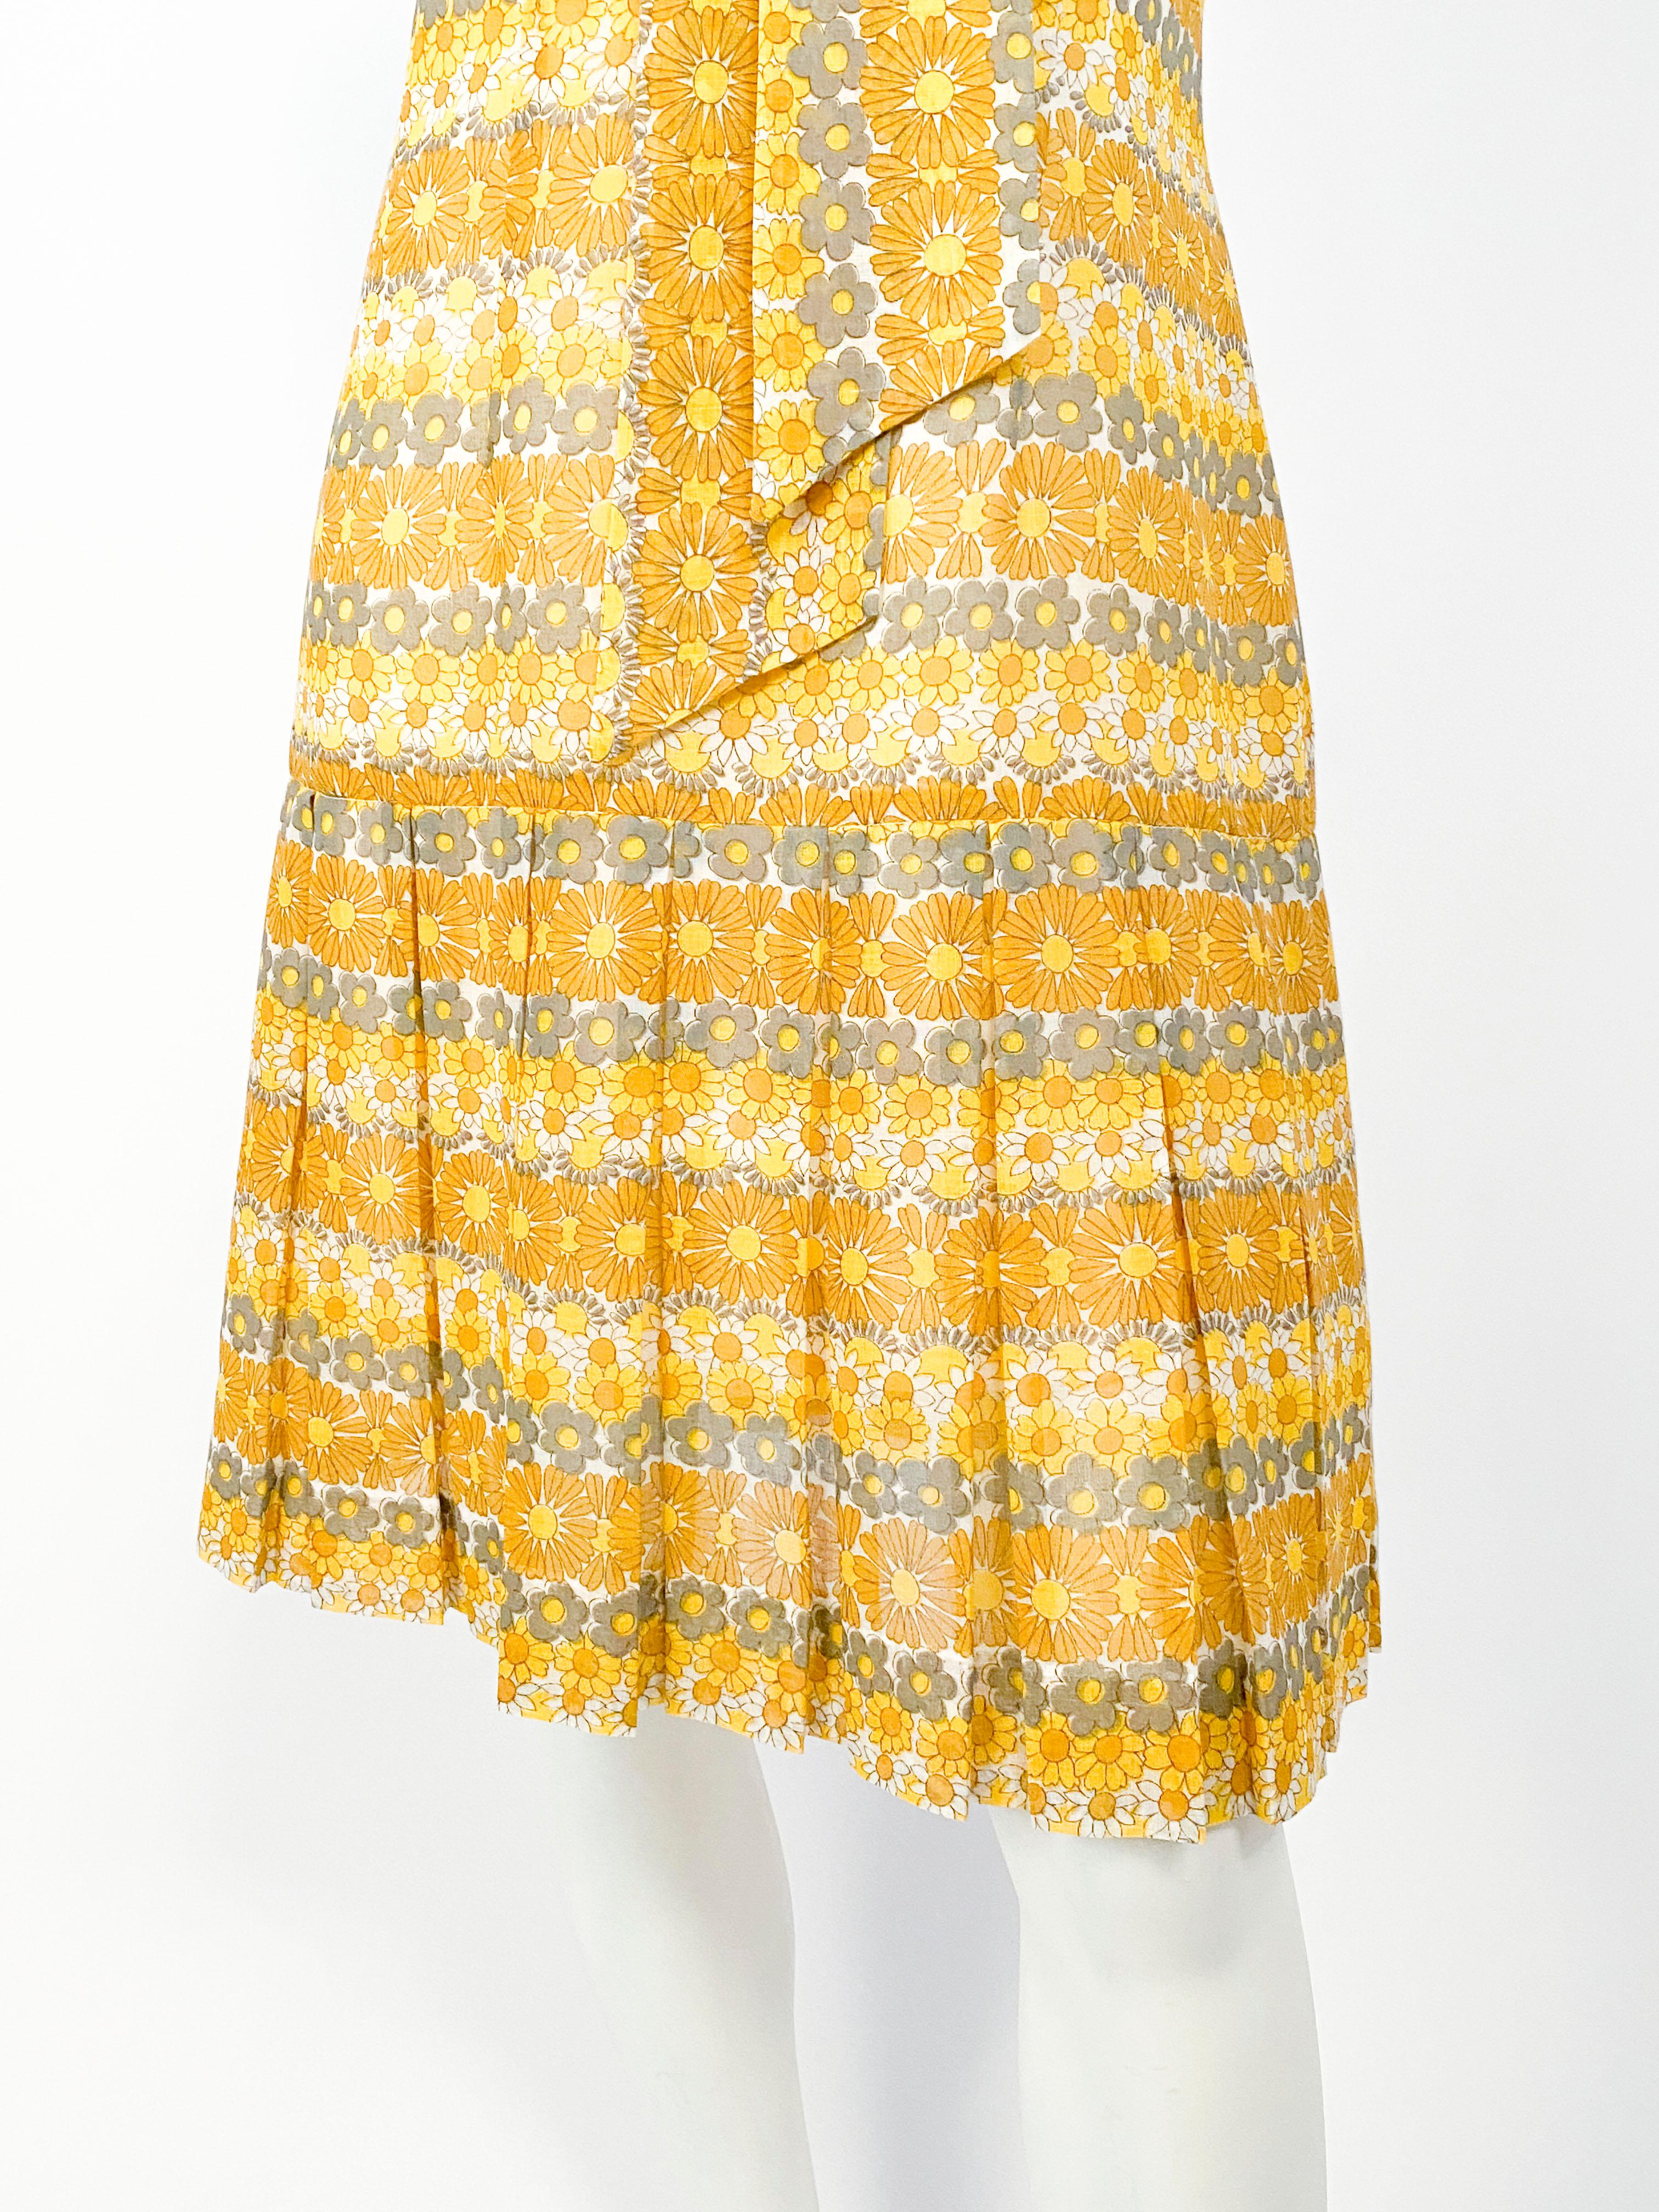 yellow daisy dress